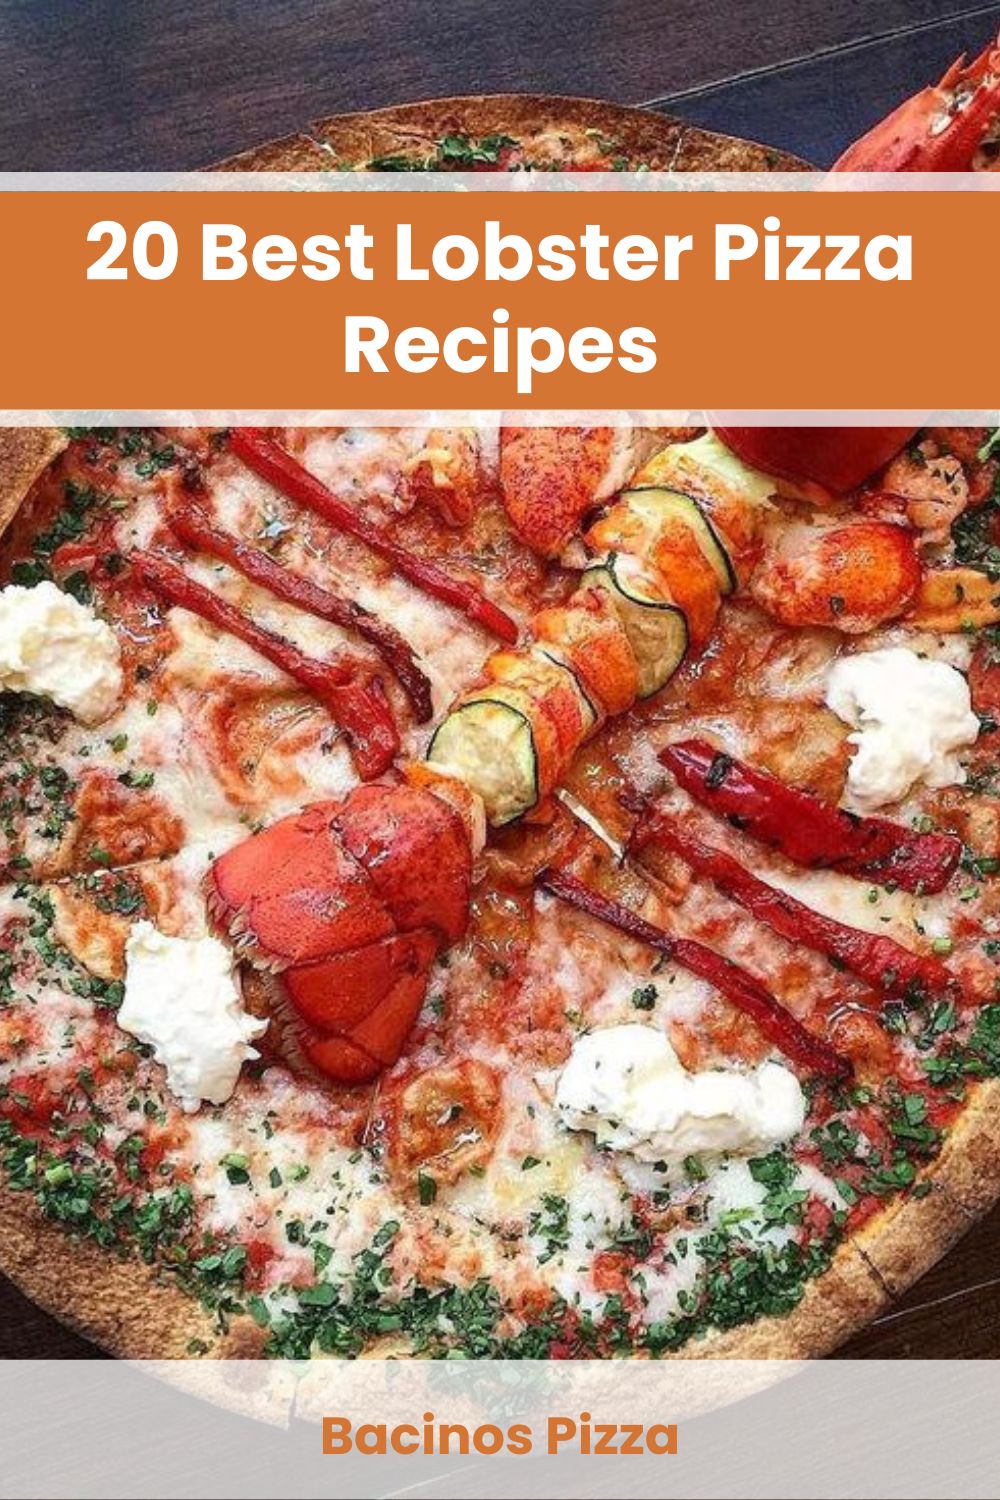 Lobster Pizza Recipes